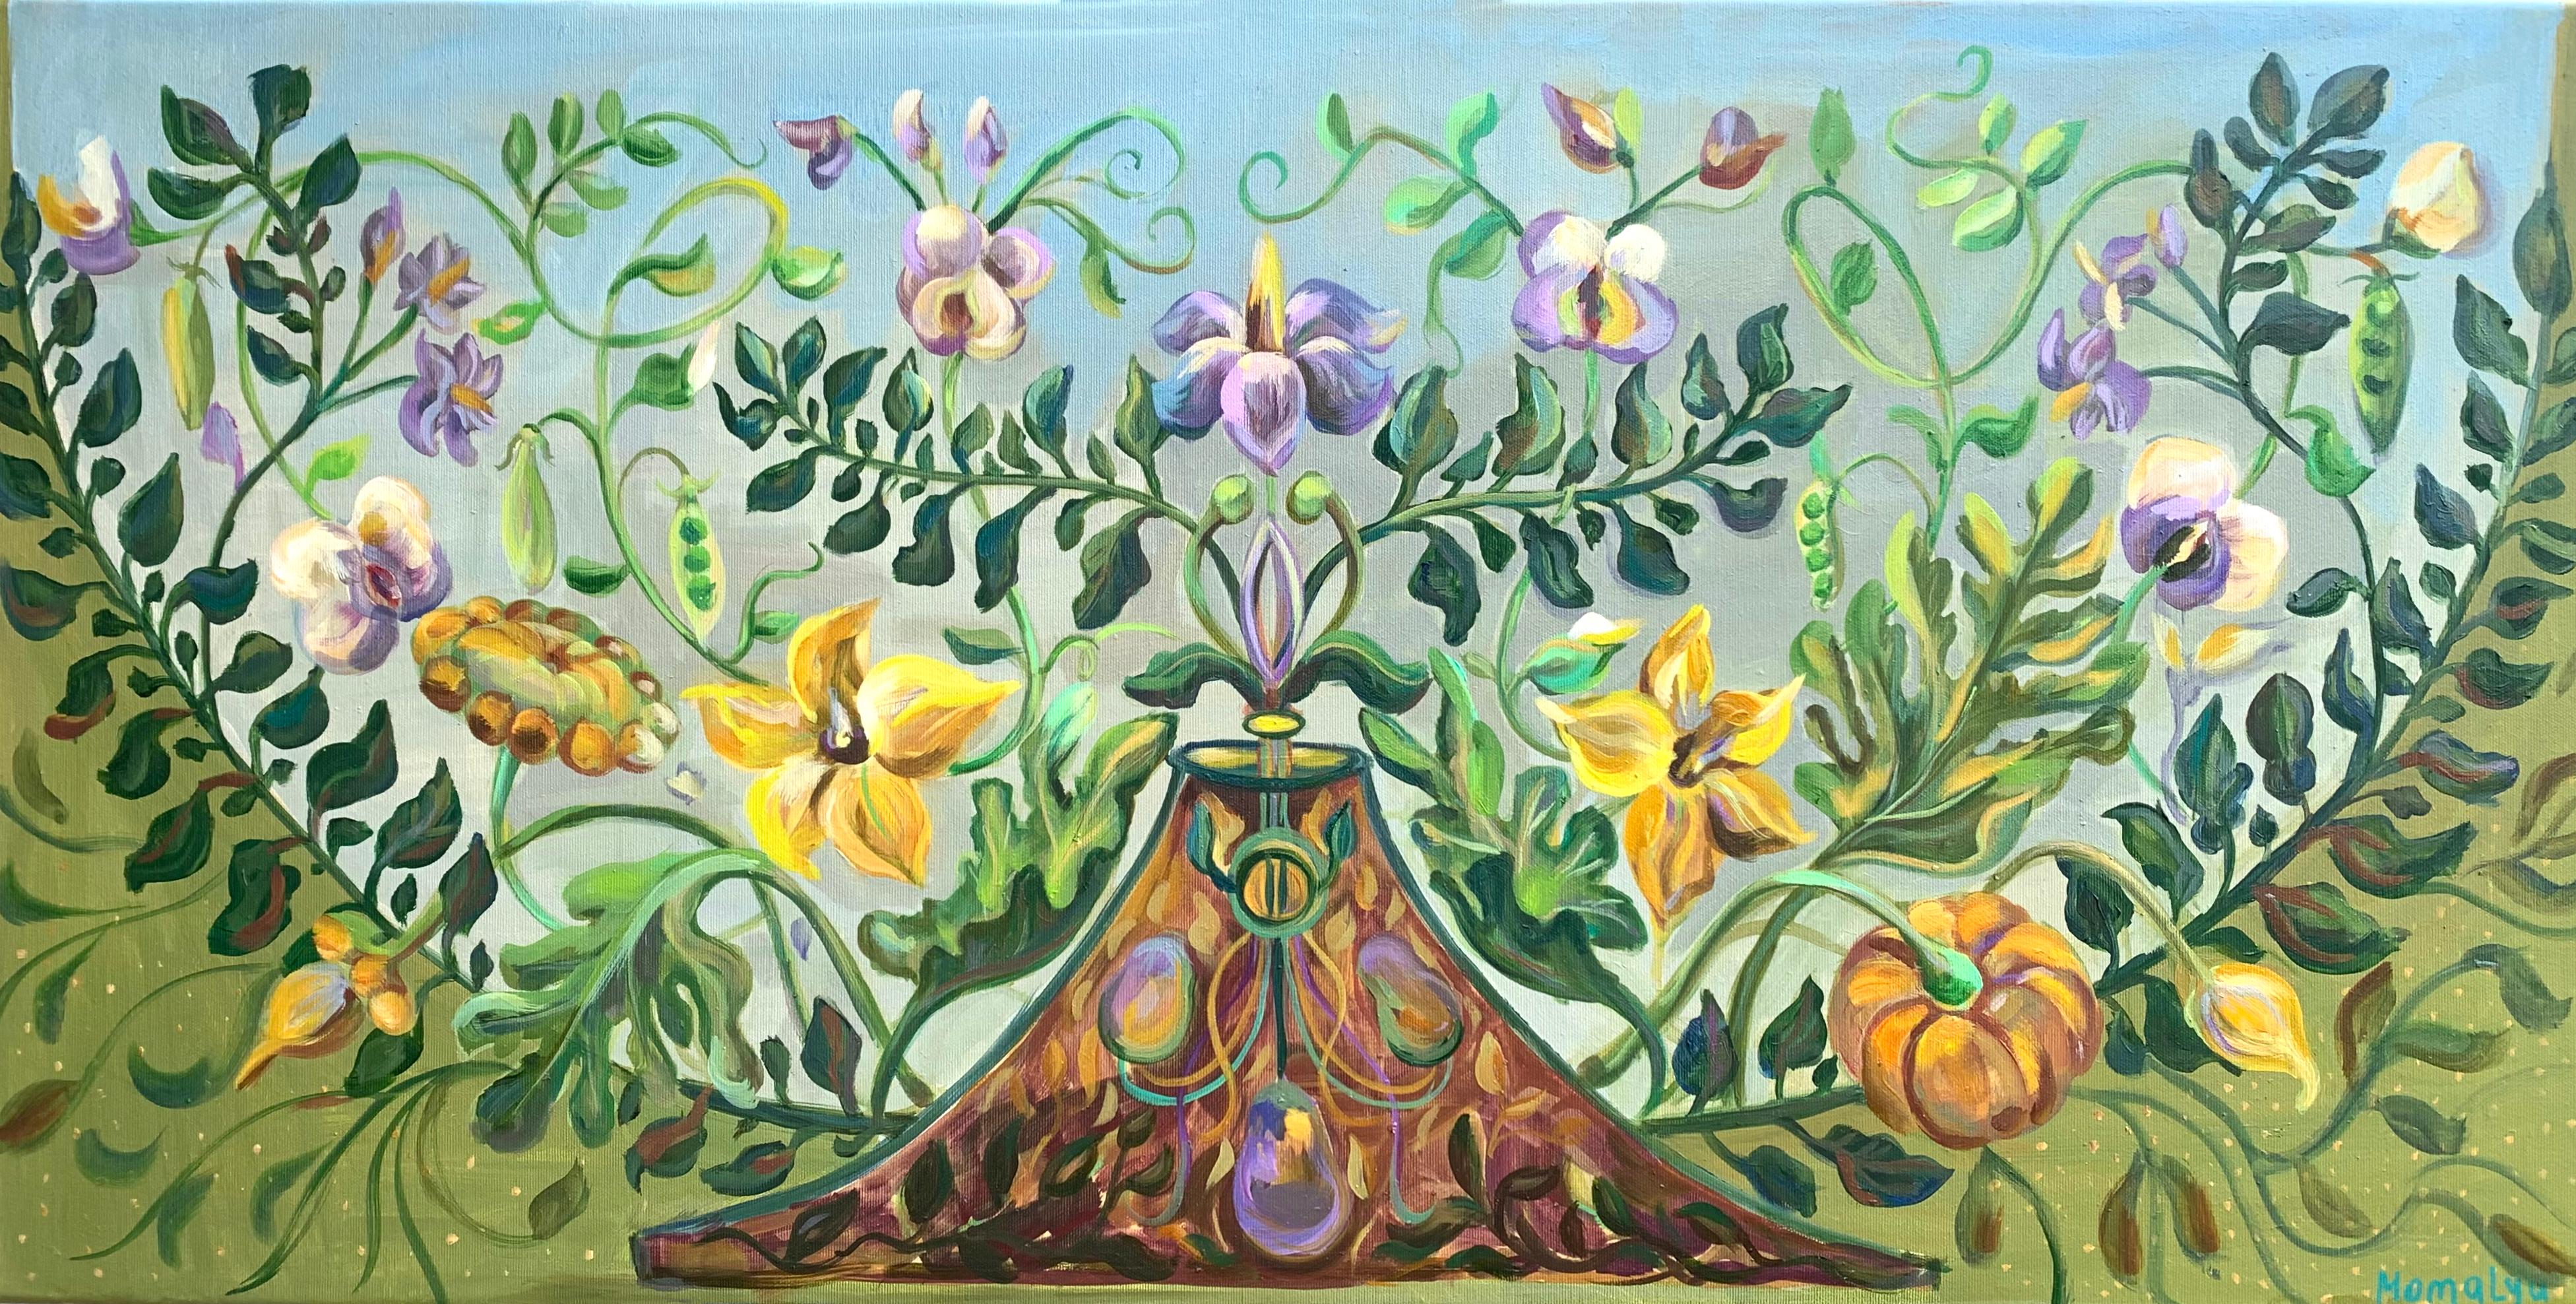 Peaceful Kingdom of Plants. Botanical decorative oil painting